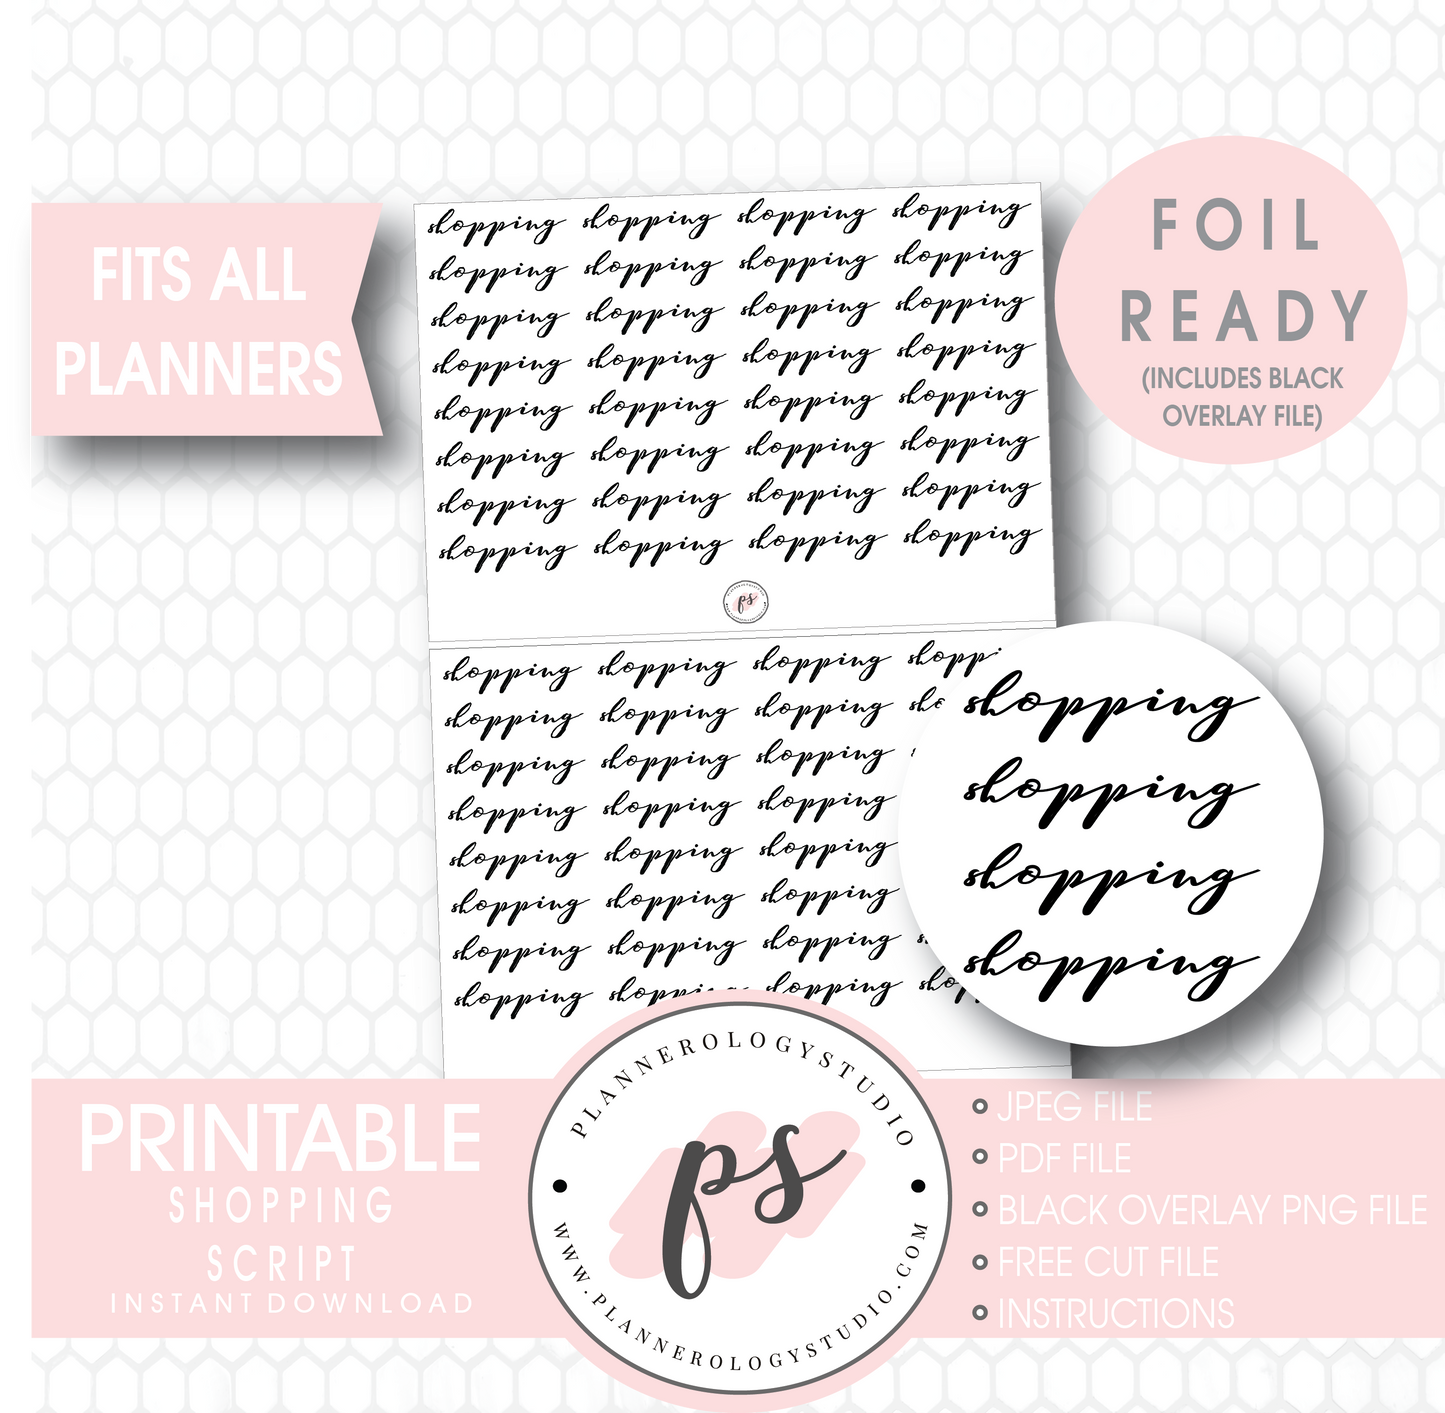 Shopping Script Digital Printable Planner Stickers (Foil Ready) - Plannerologystudio